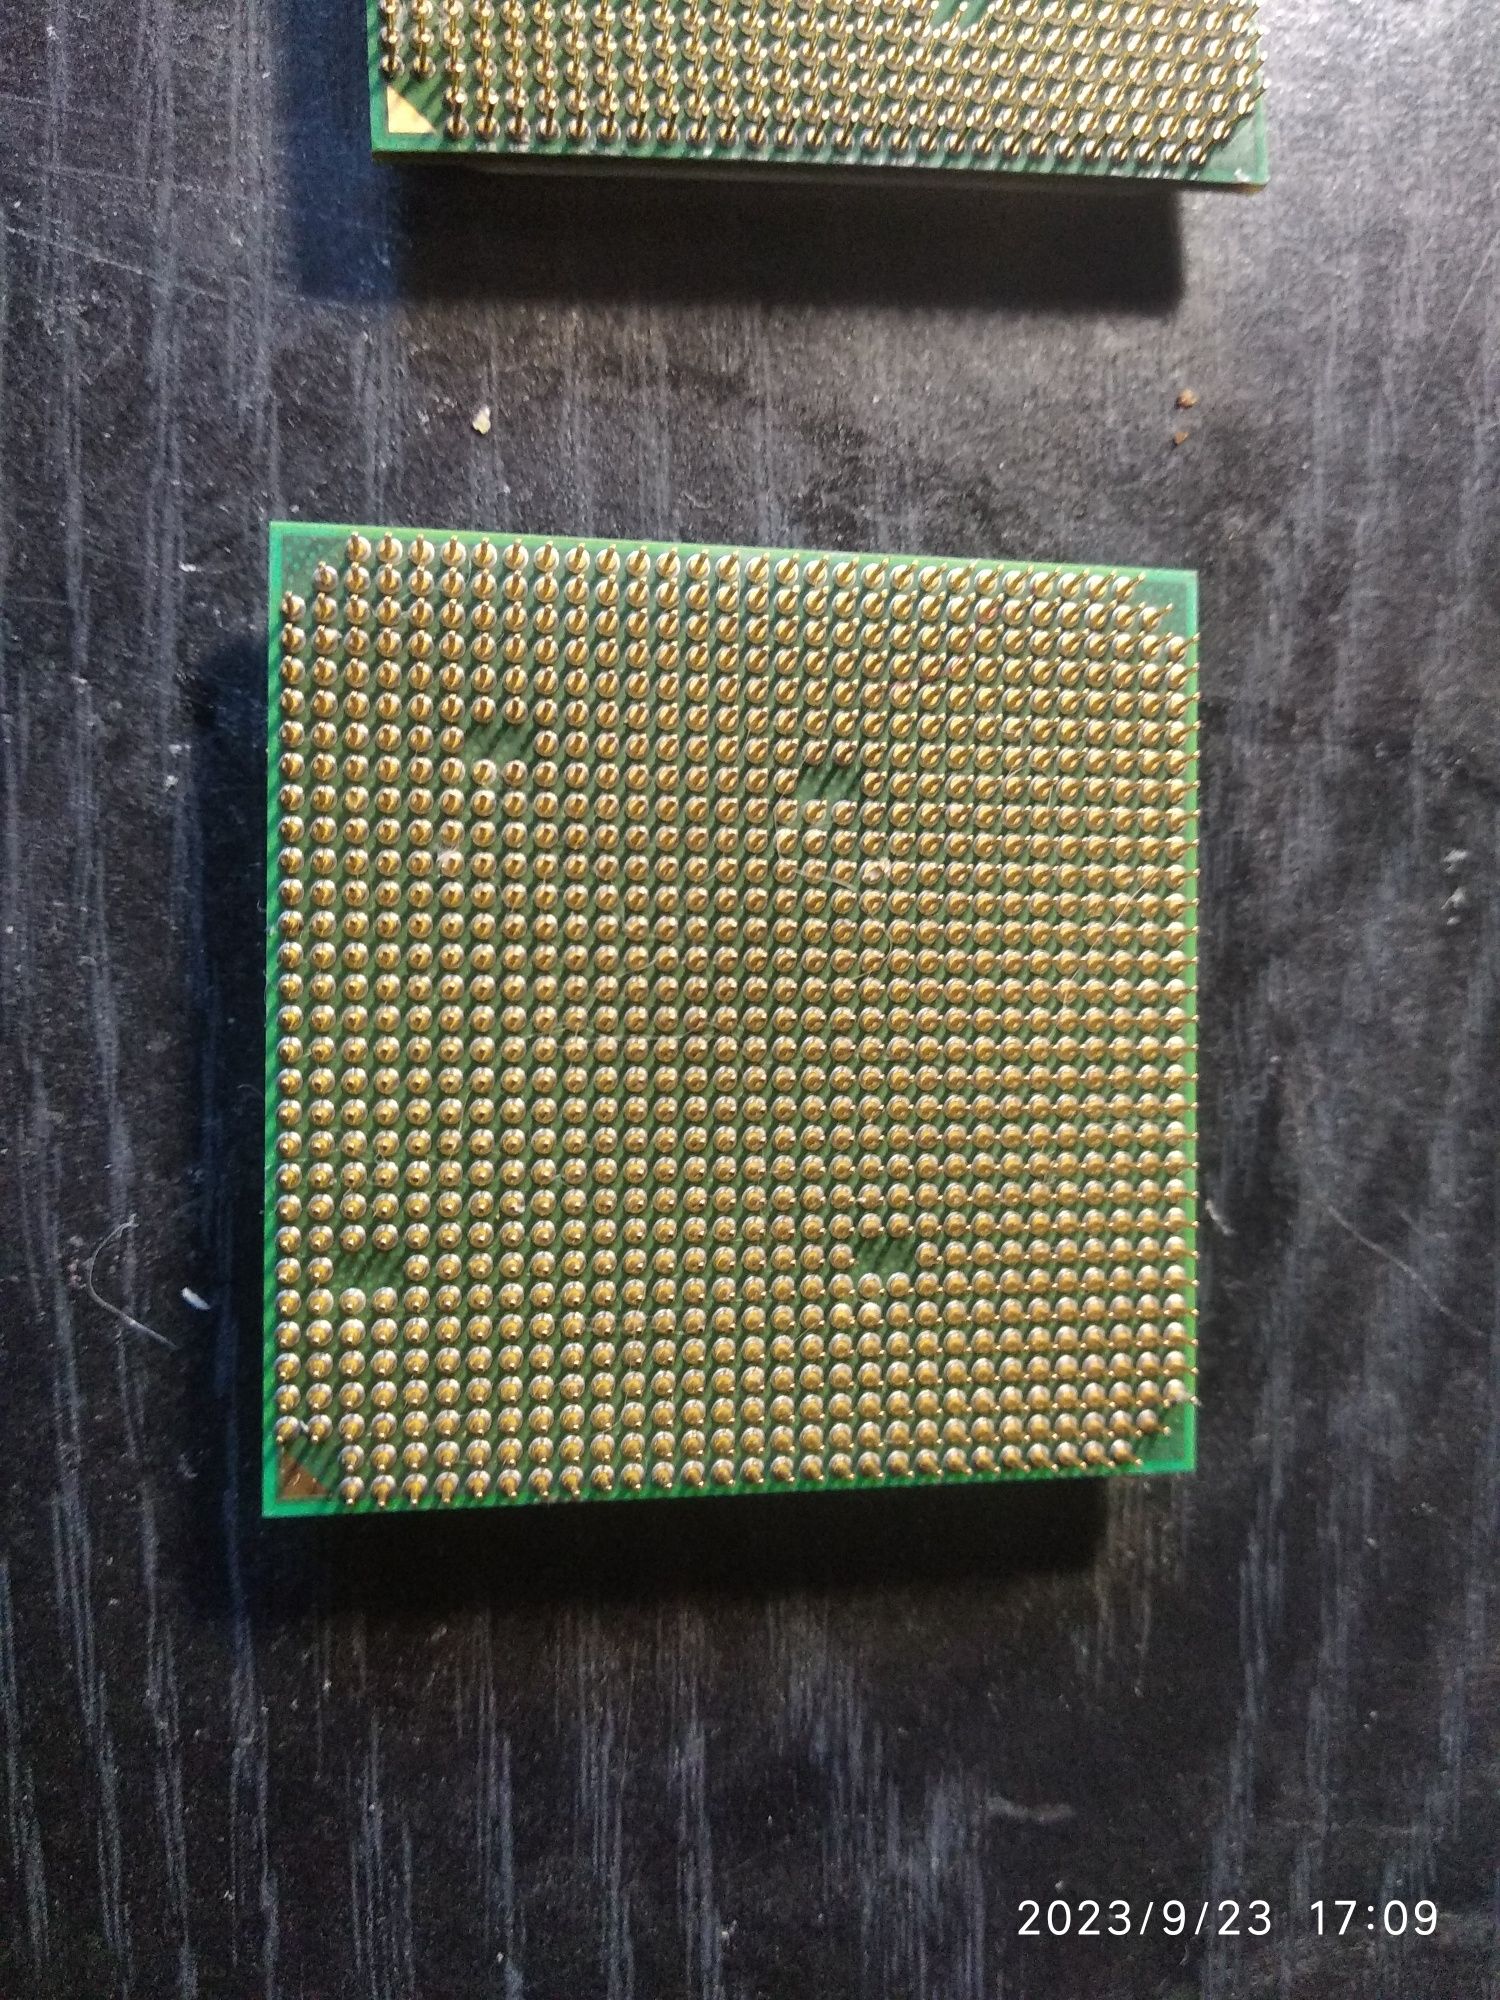 Процессор Amd athlon 64